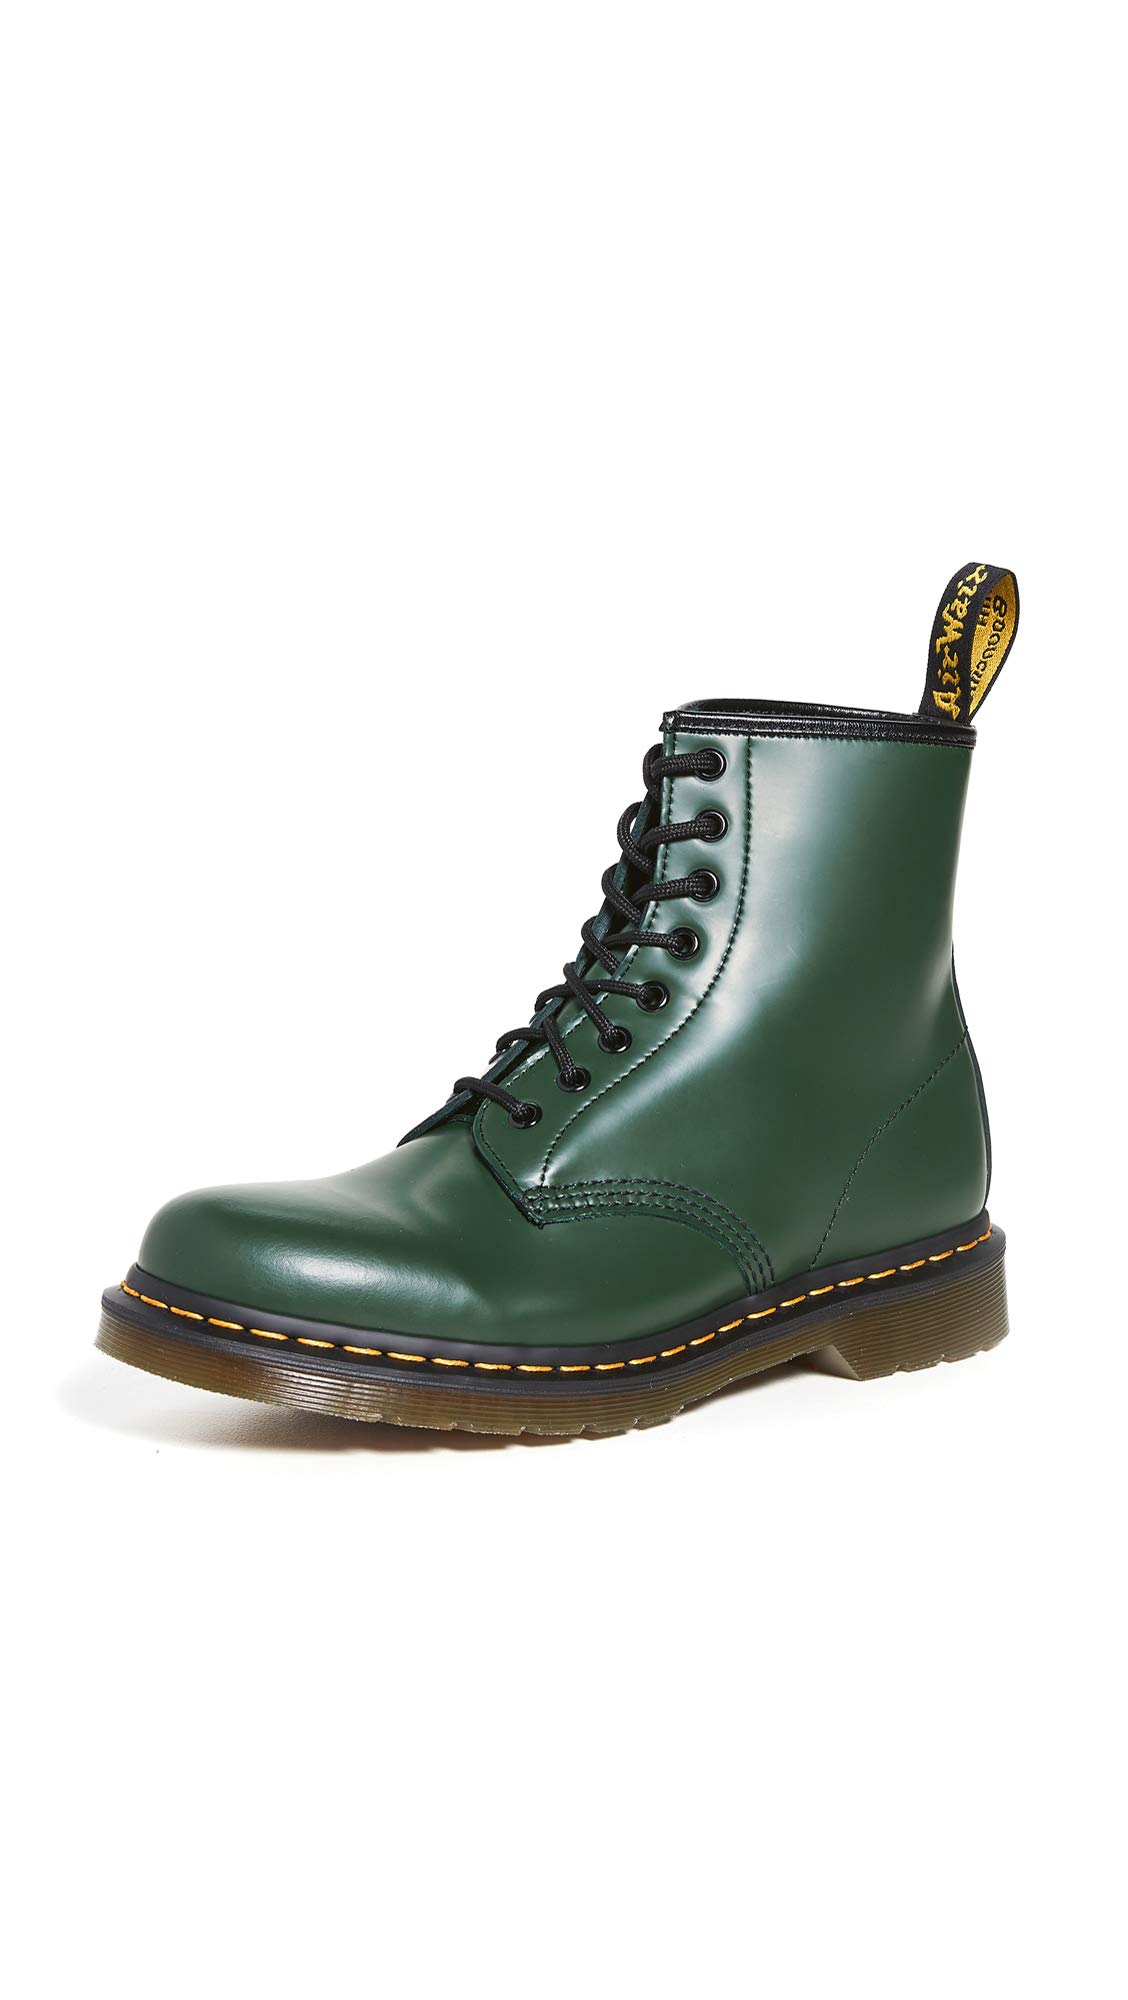 Dr. Martens 1460 11822207 Combat Boots, Grün (Green), 39 EU